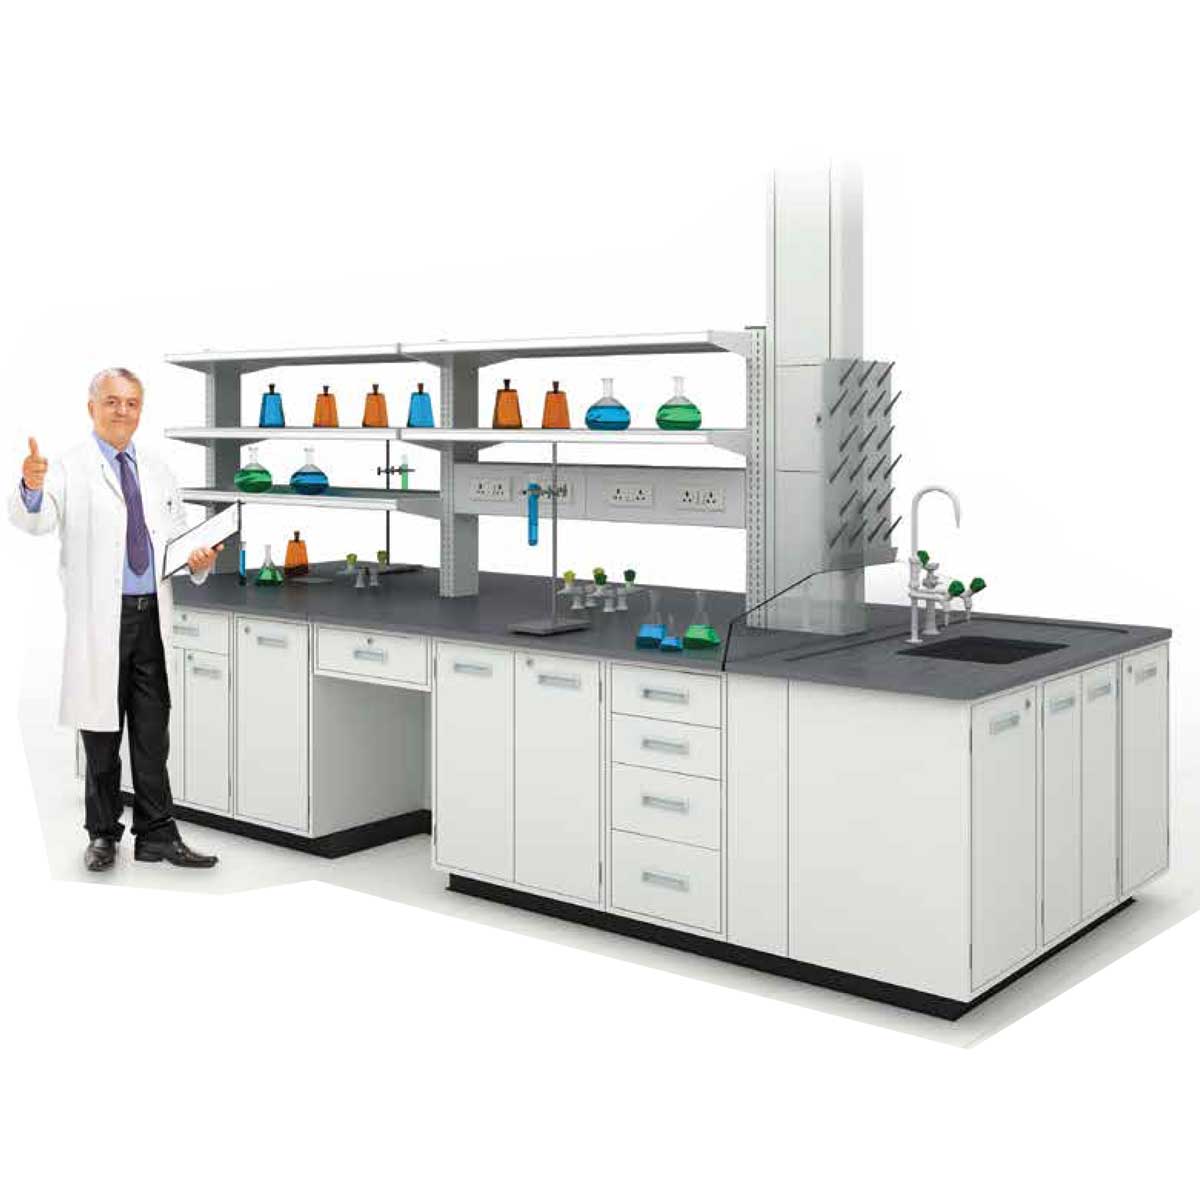 Laboratory Desks Manufacturers, Suppliers in Kundli Industrial Area